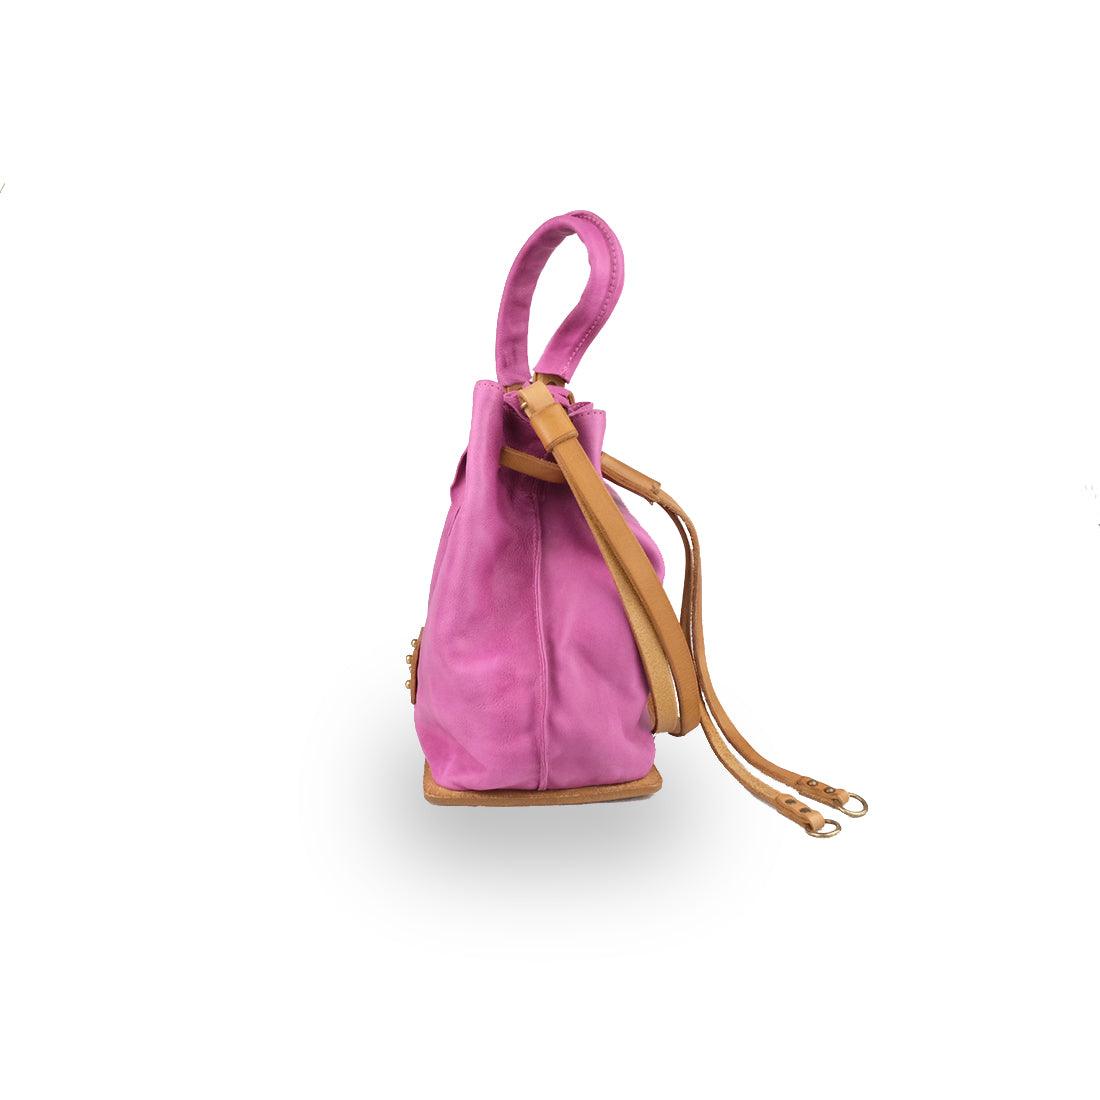 Bella Handbag - A.S. 98 - handbags